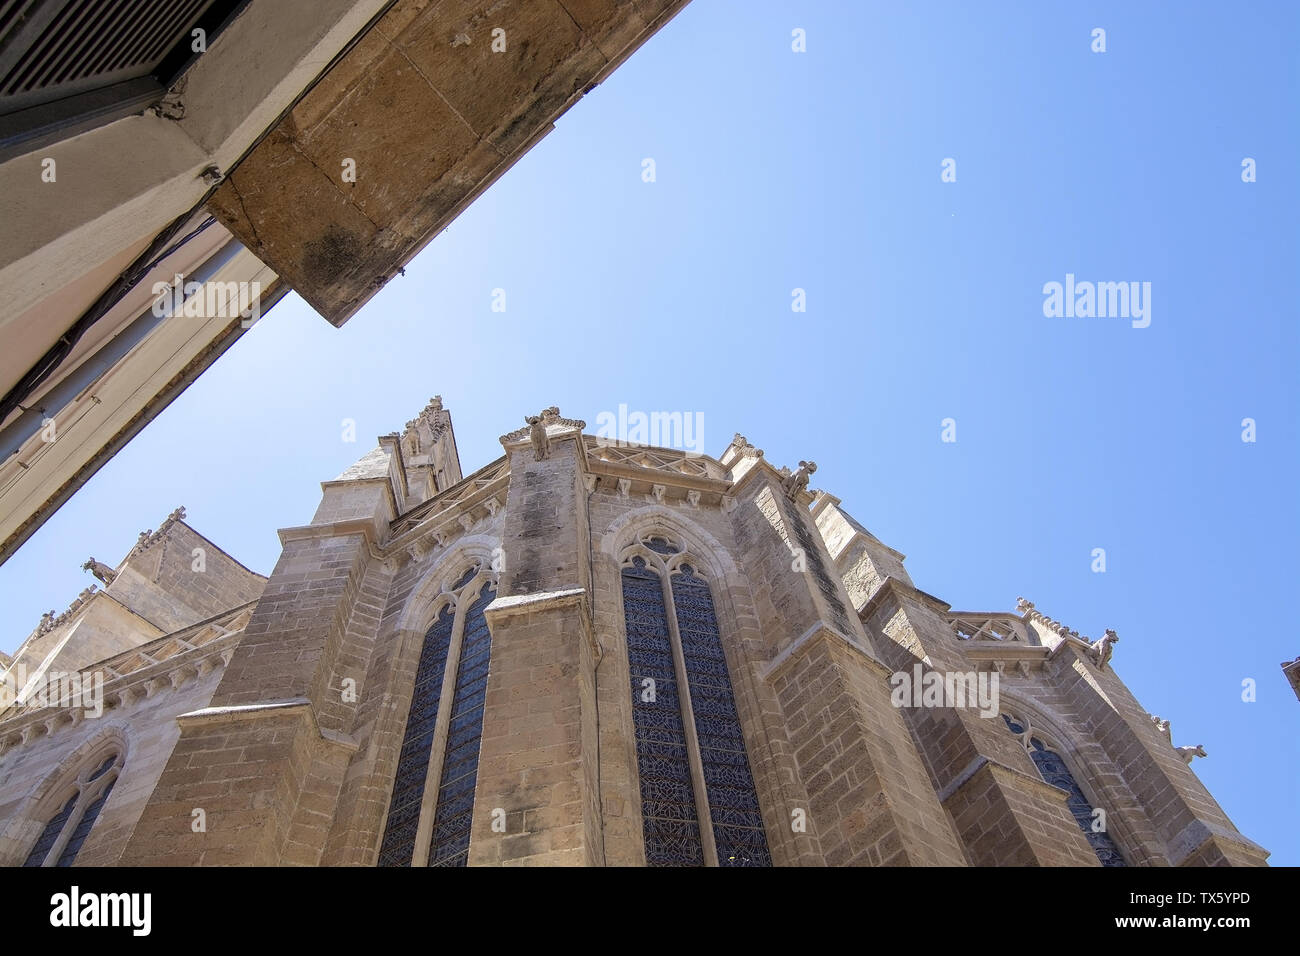 PALMA, MALLORCA, SPAIN - MAY 20, 2019: Basilica Sant Francesc detail against sky on May 20, 2019 in Palma, Mallorca, Spain. Stock Photo